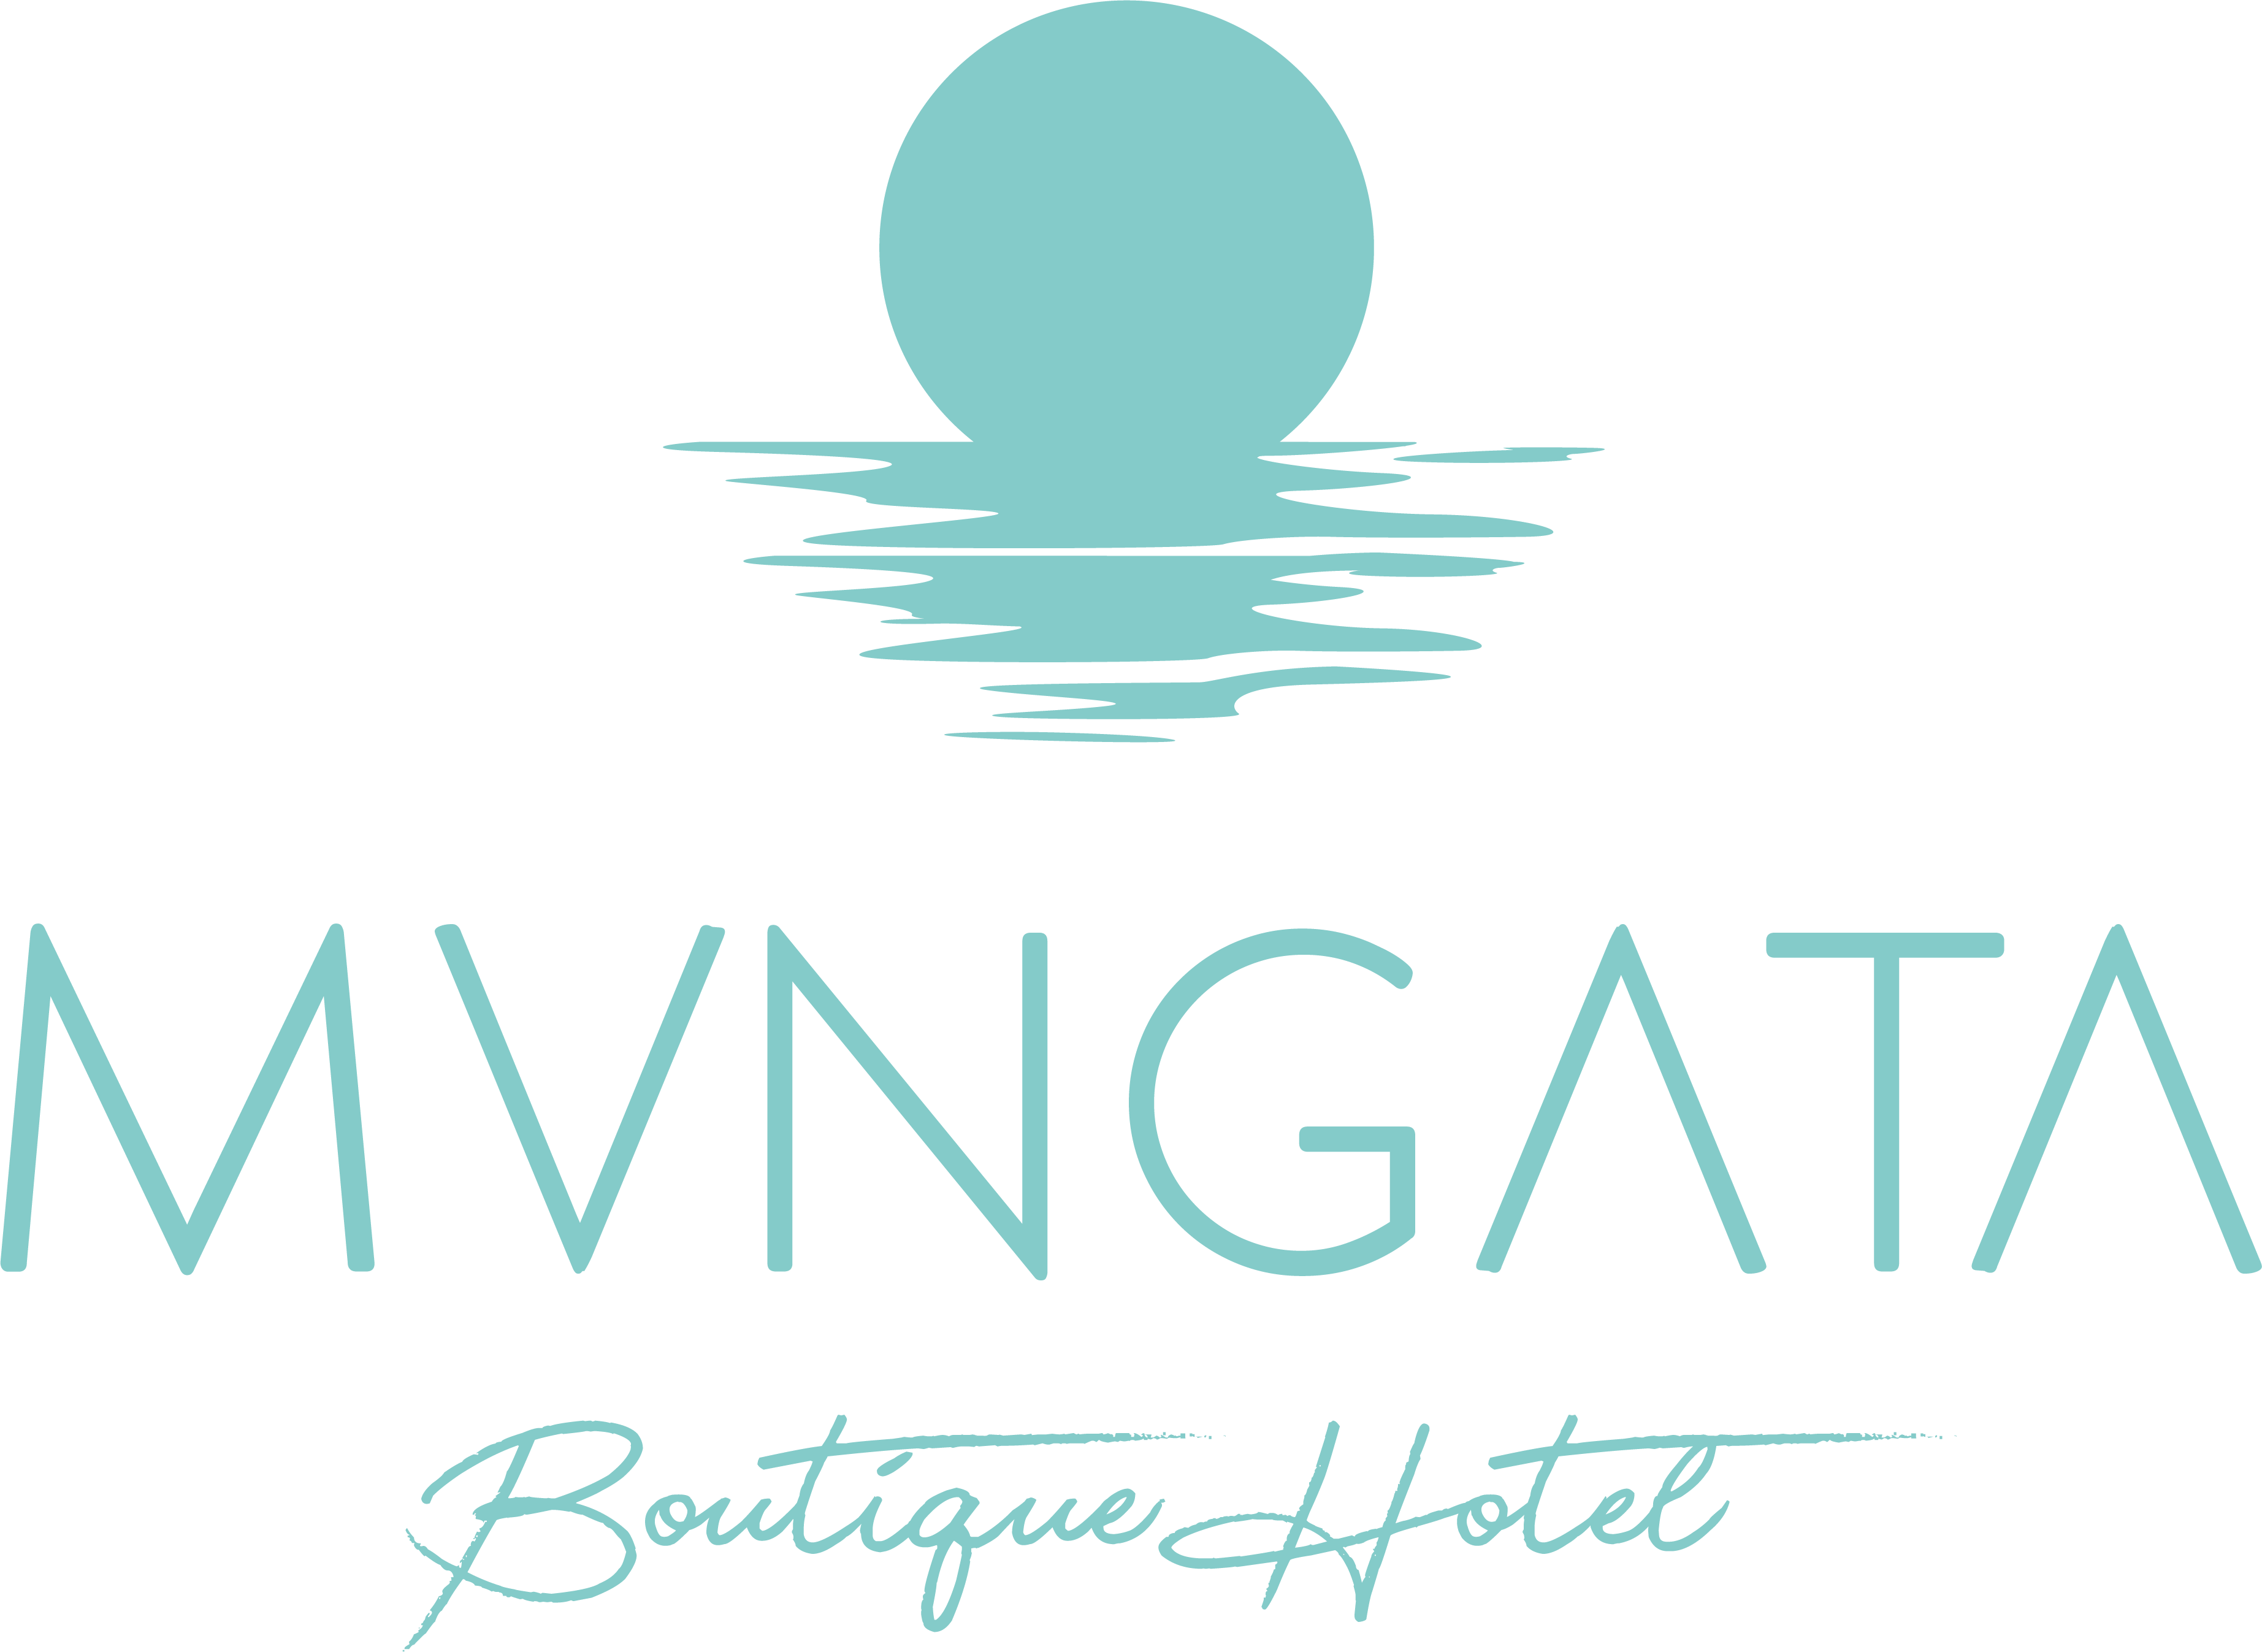 MVNGATA Beach Hotel